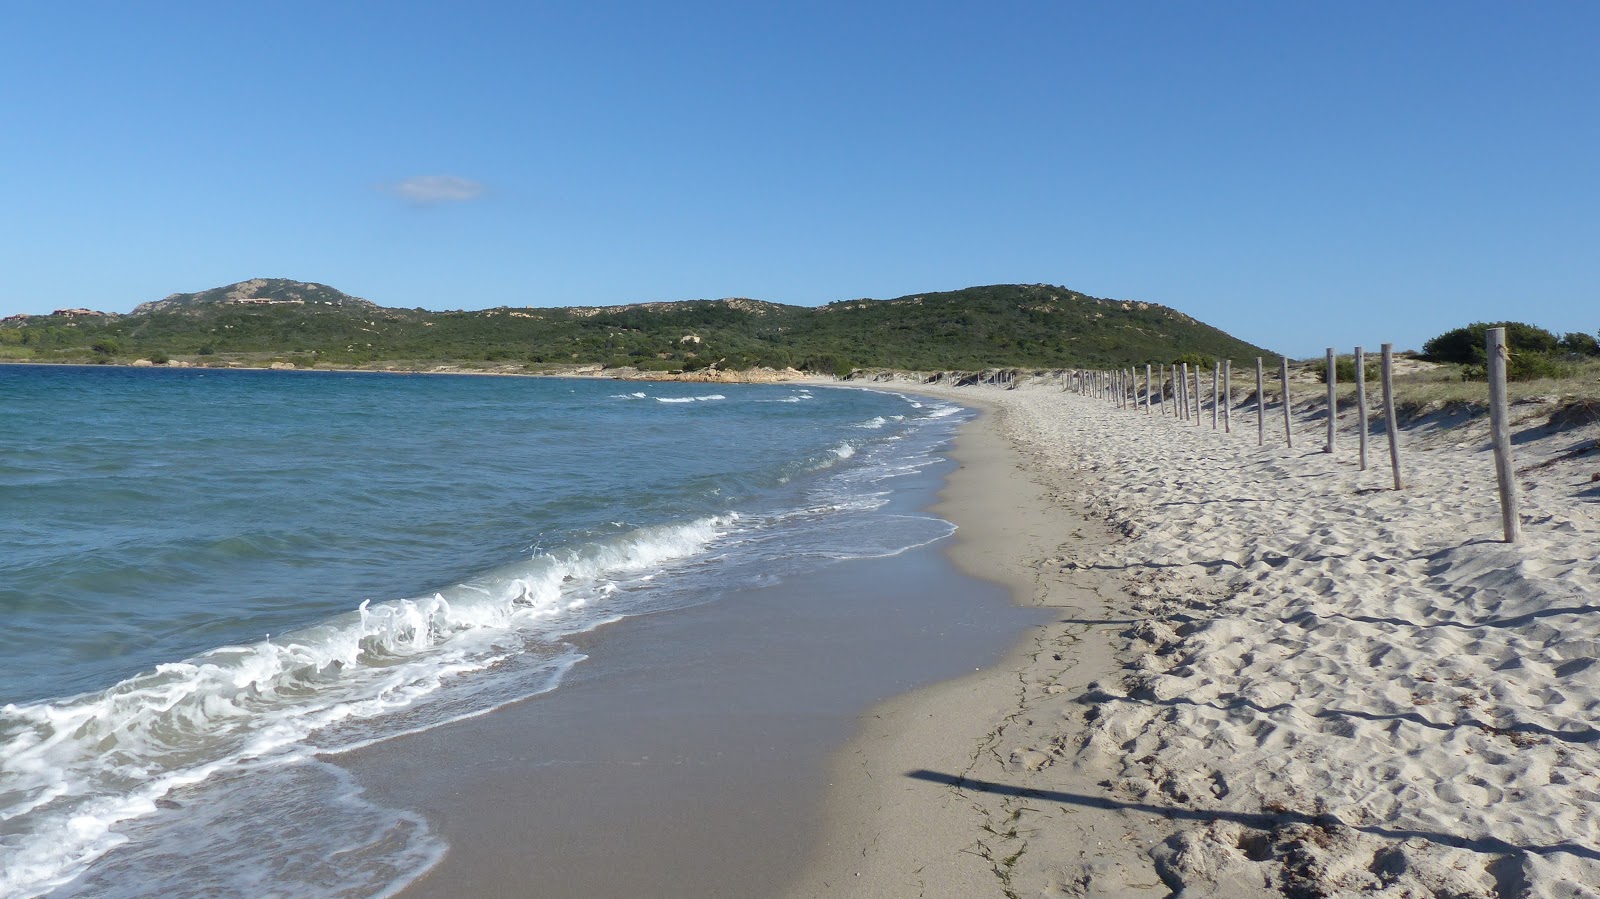 Foto de Praia Marina Maria - lugar popular entre os apreciadores de relaxamento